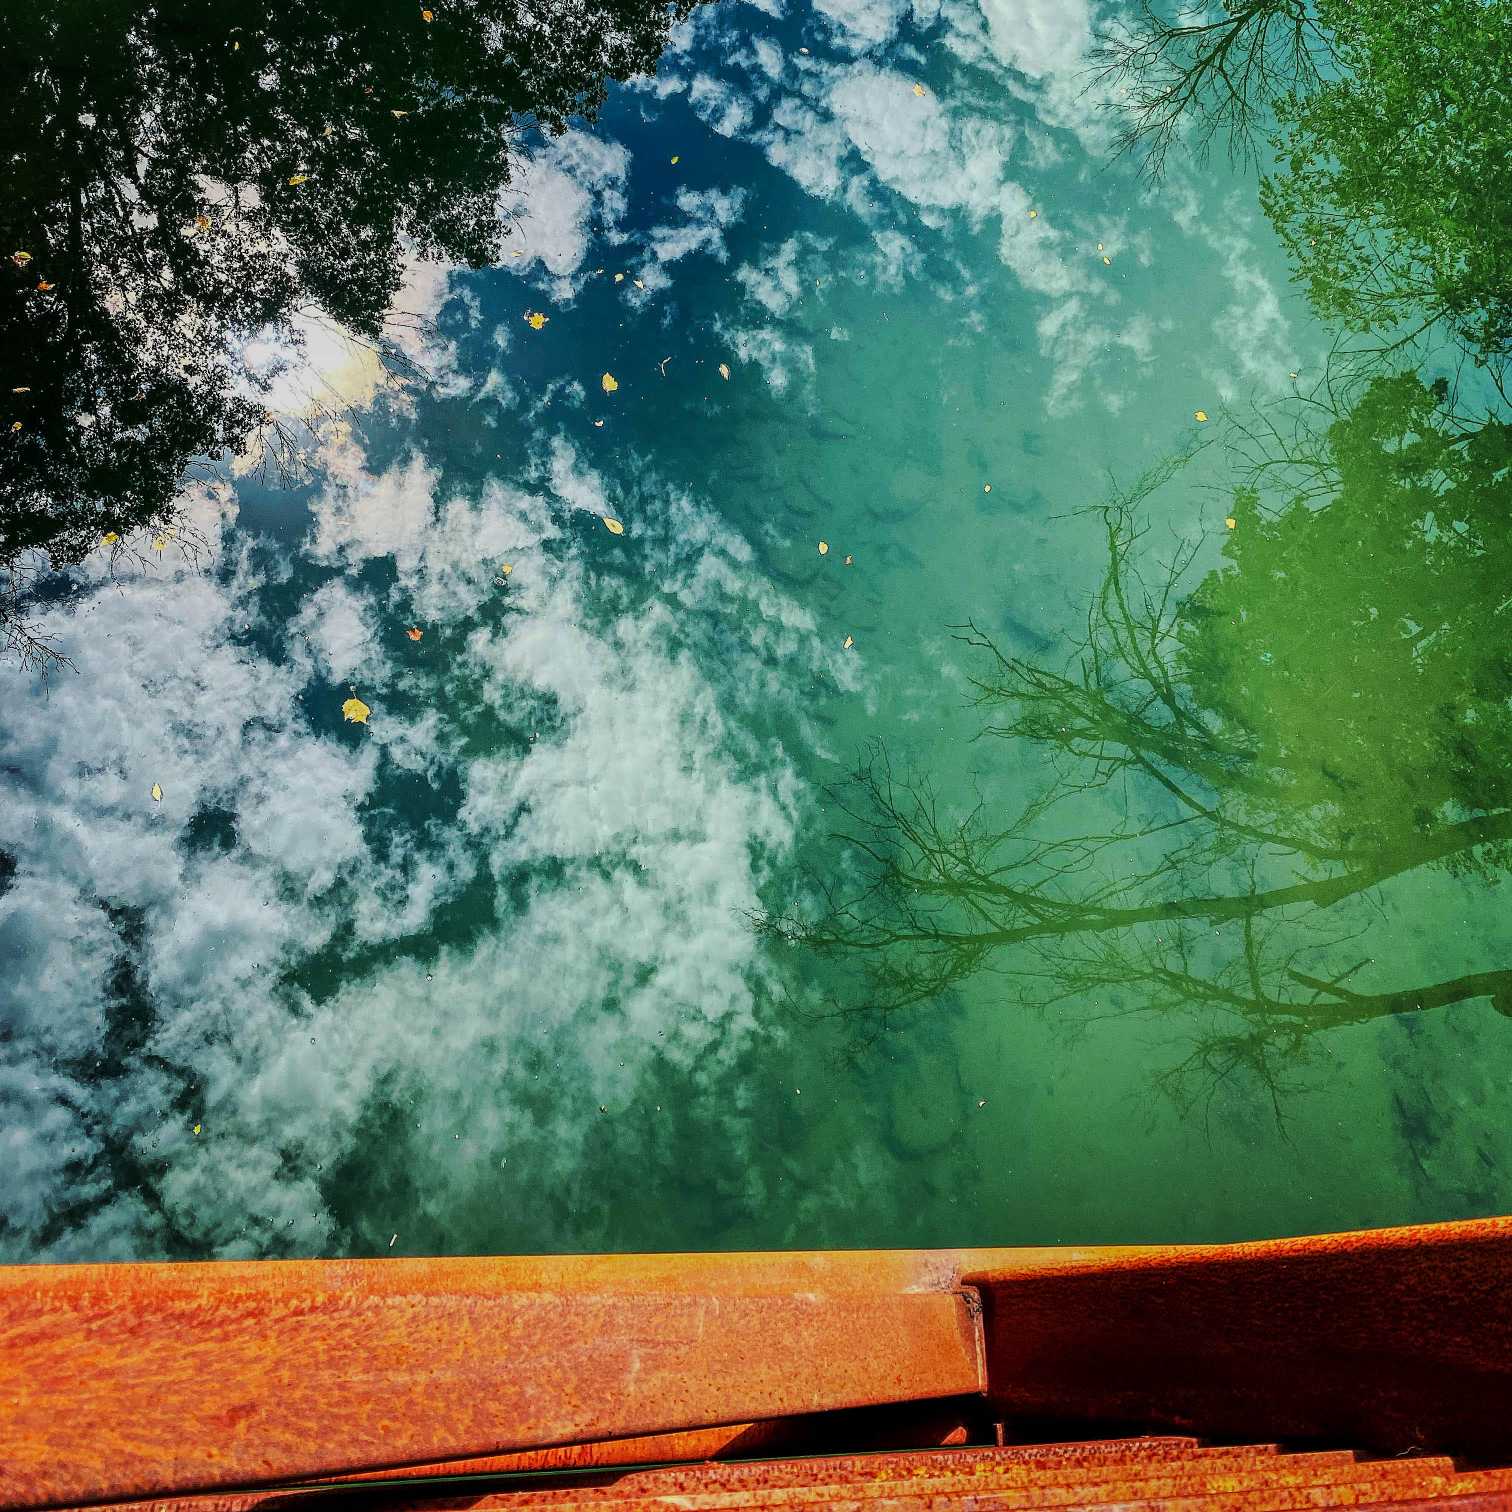 A reflection of trees appears in Bushkill Creek below the pedestrian bridge on the Karl Stirner Arts Trail in Easton, Pennsylvania.